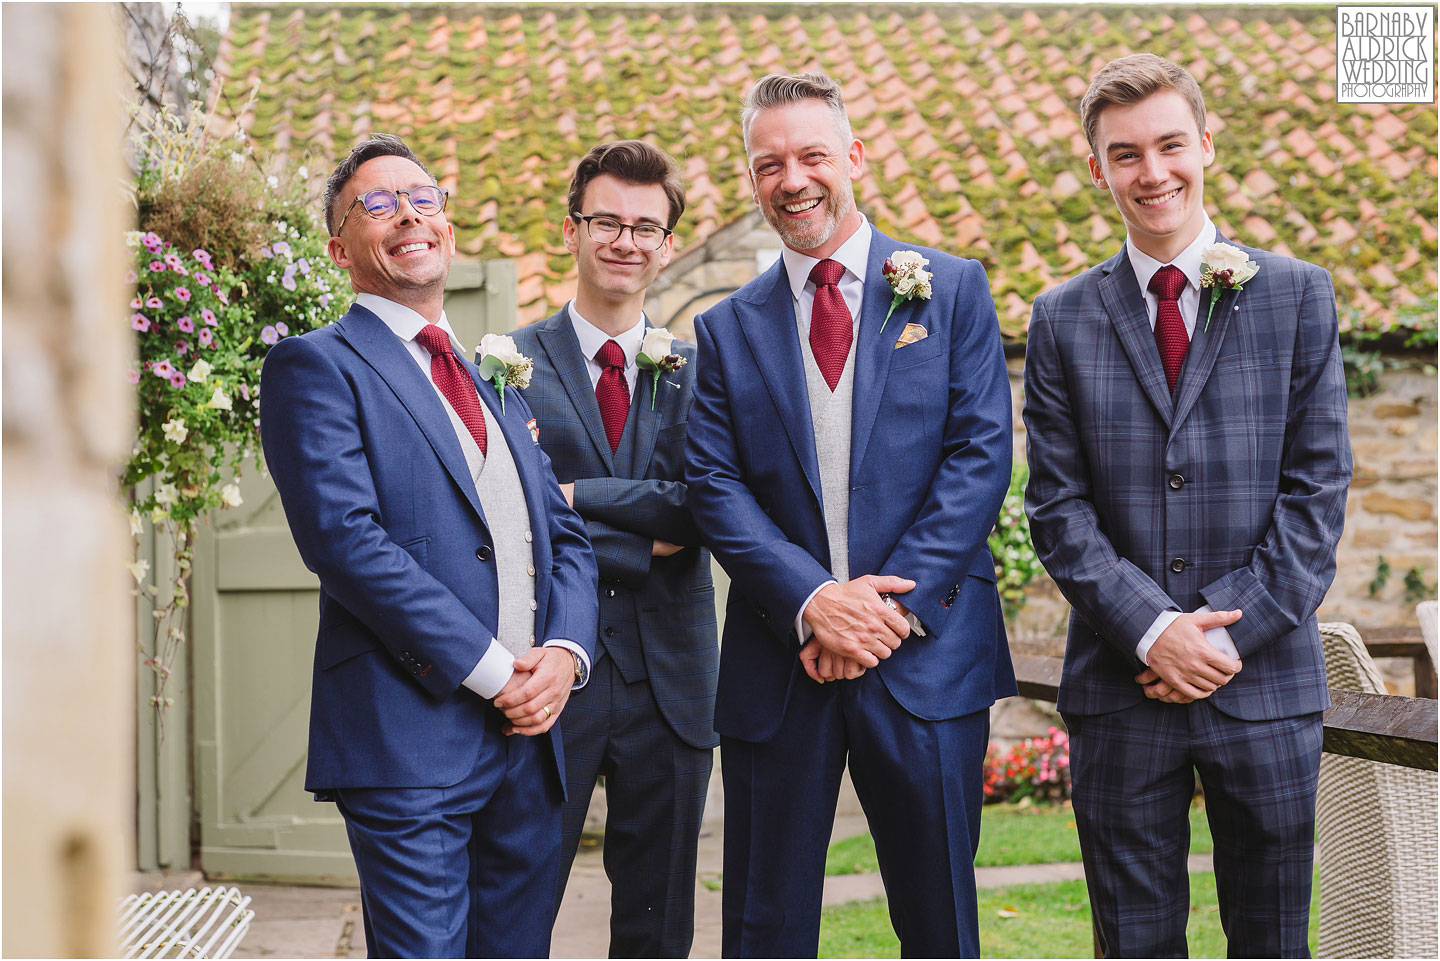 Yorkshire Gents wedding suit inspiration